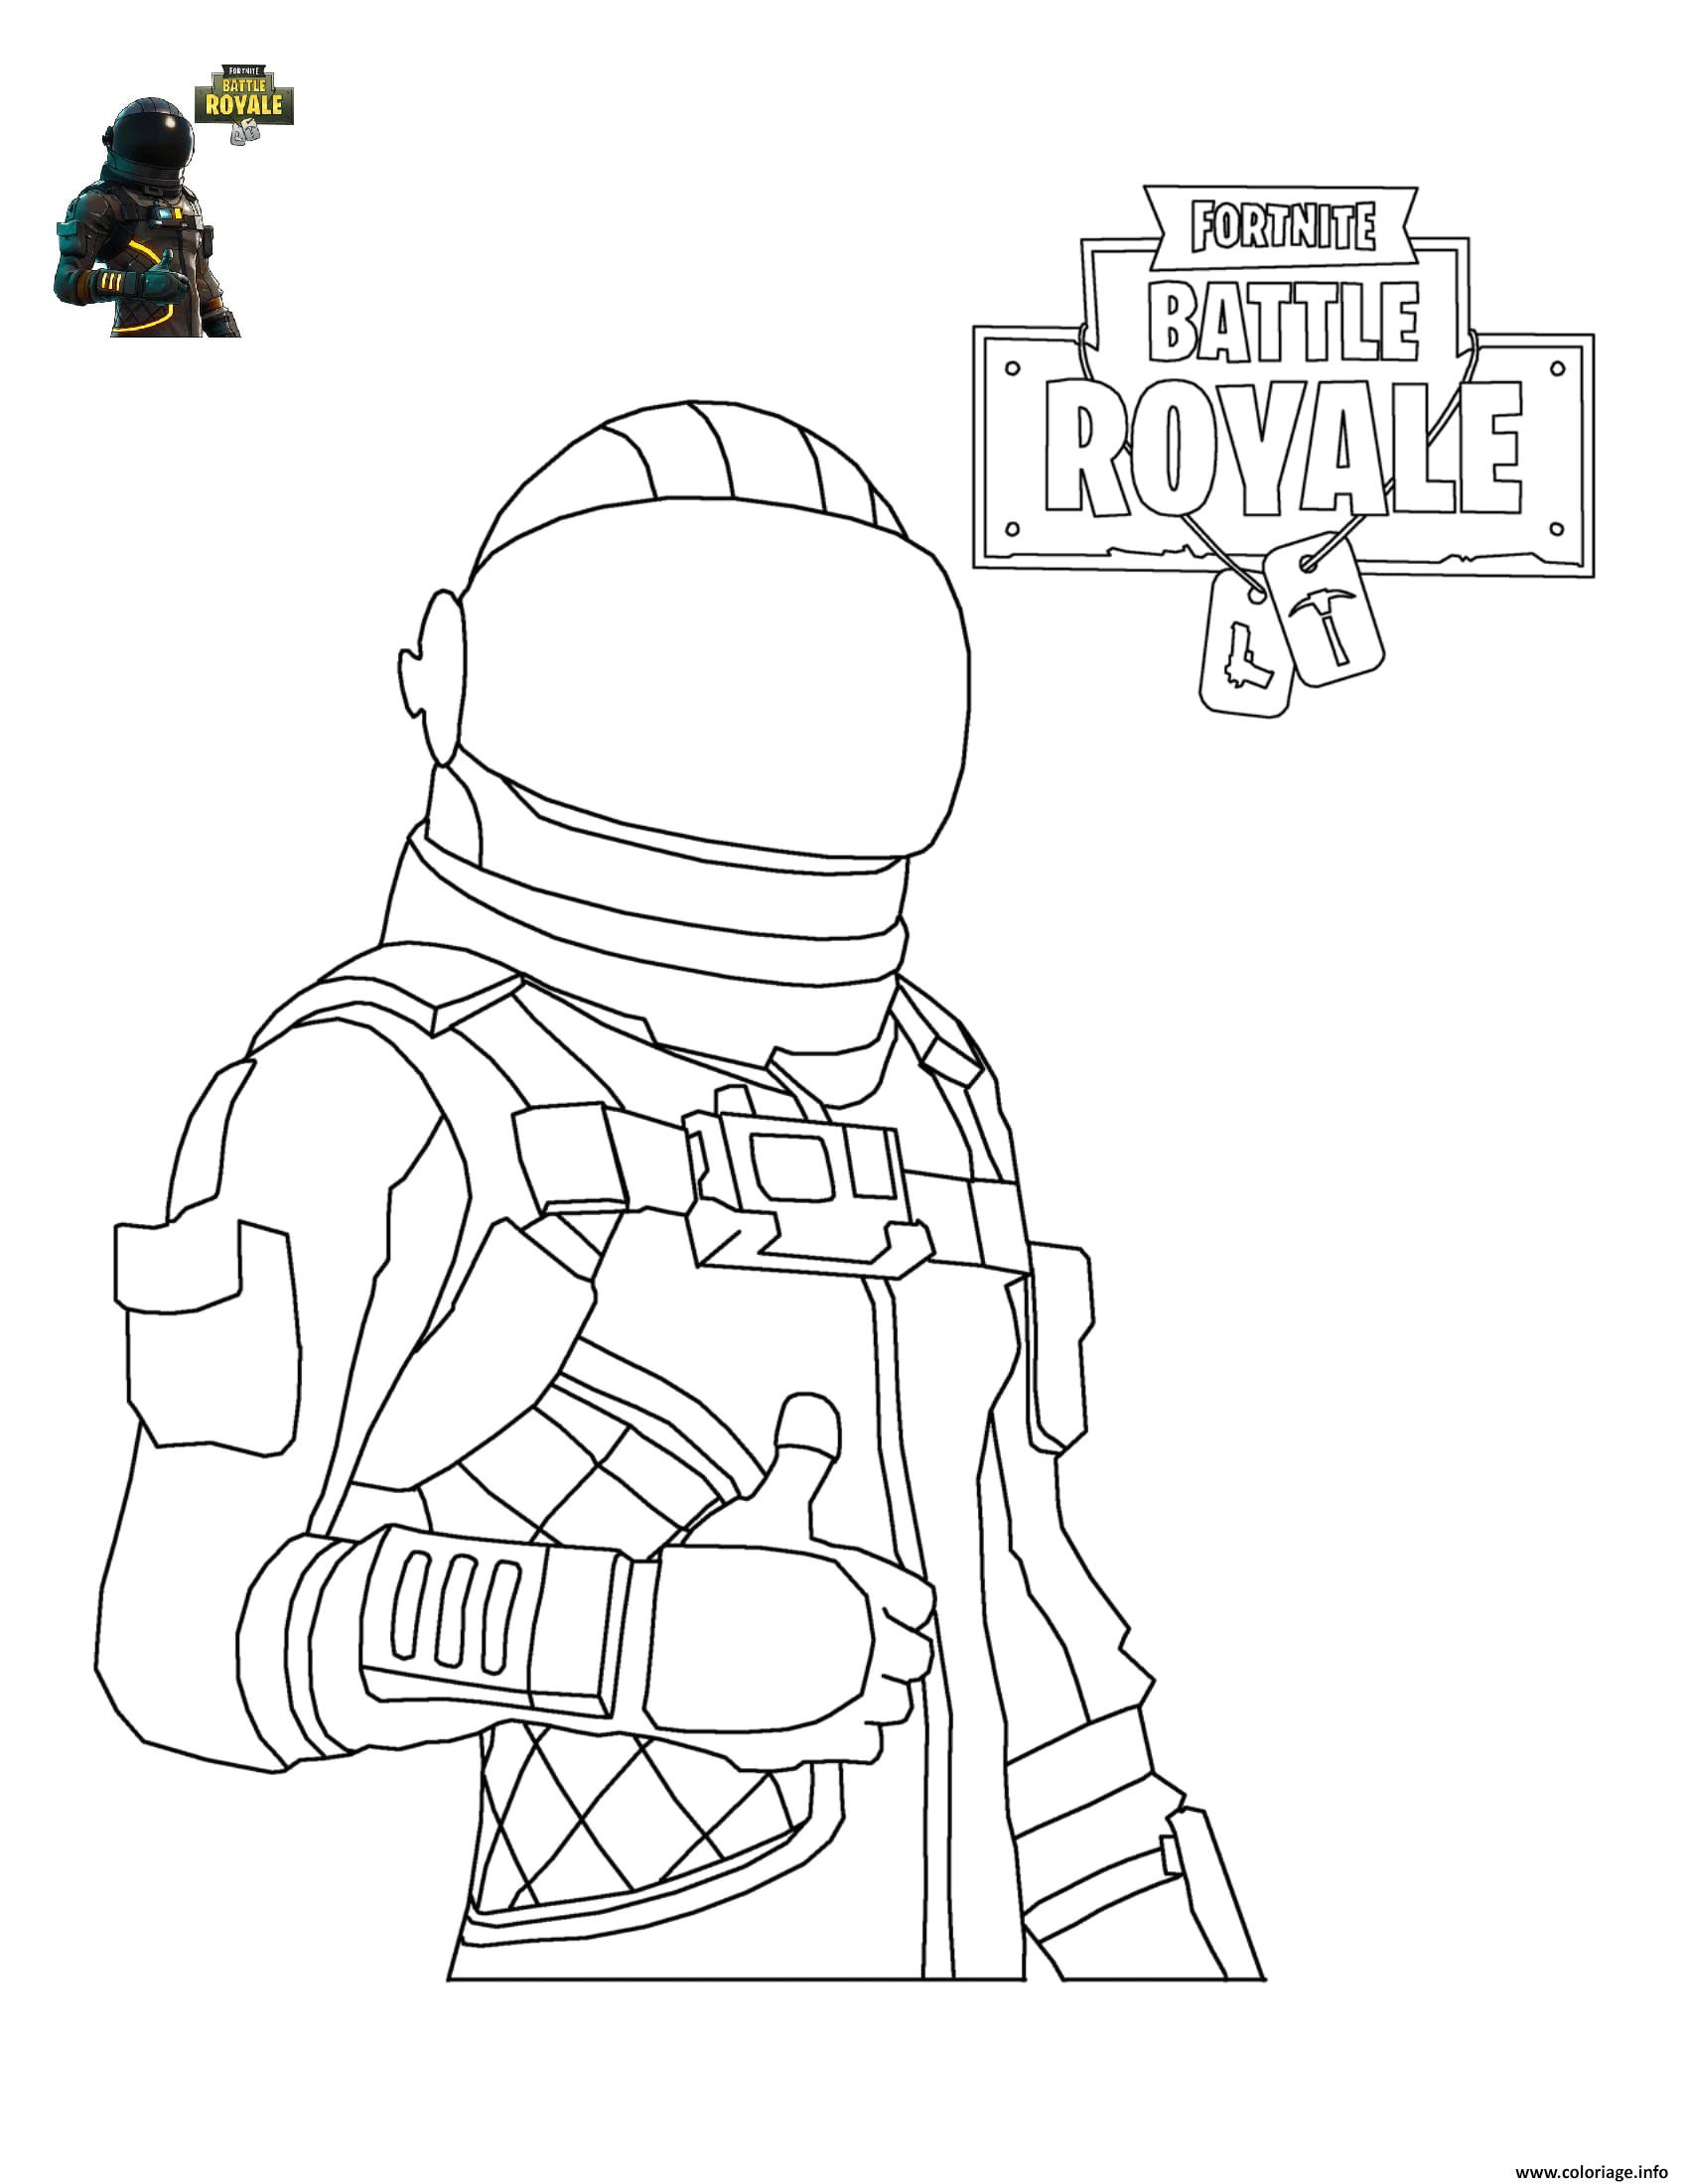 Fortnite Battle Royale personnage 4